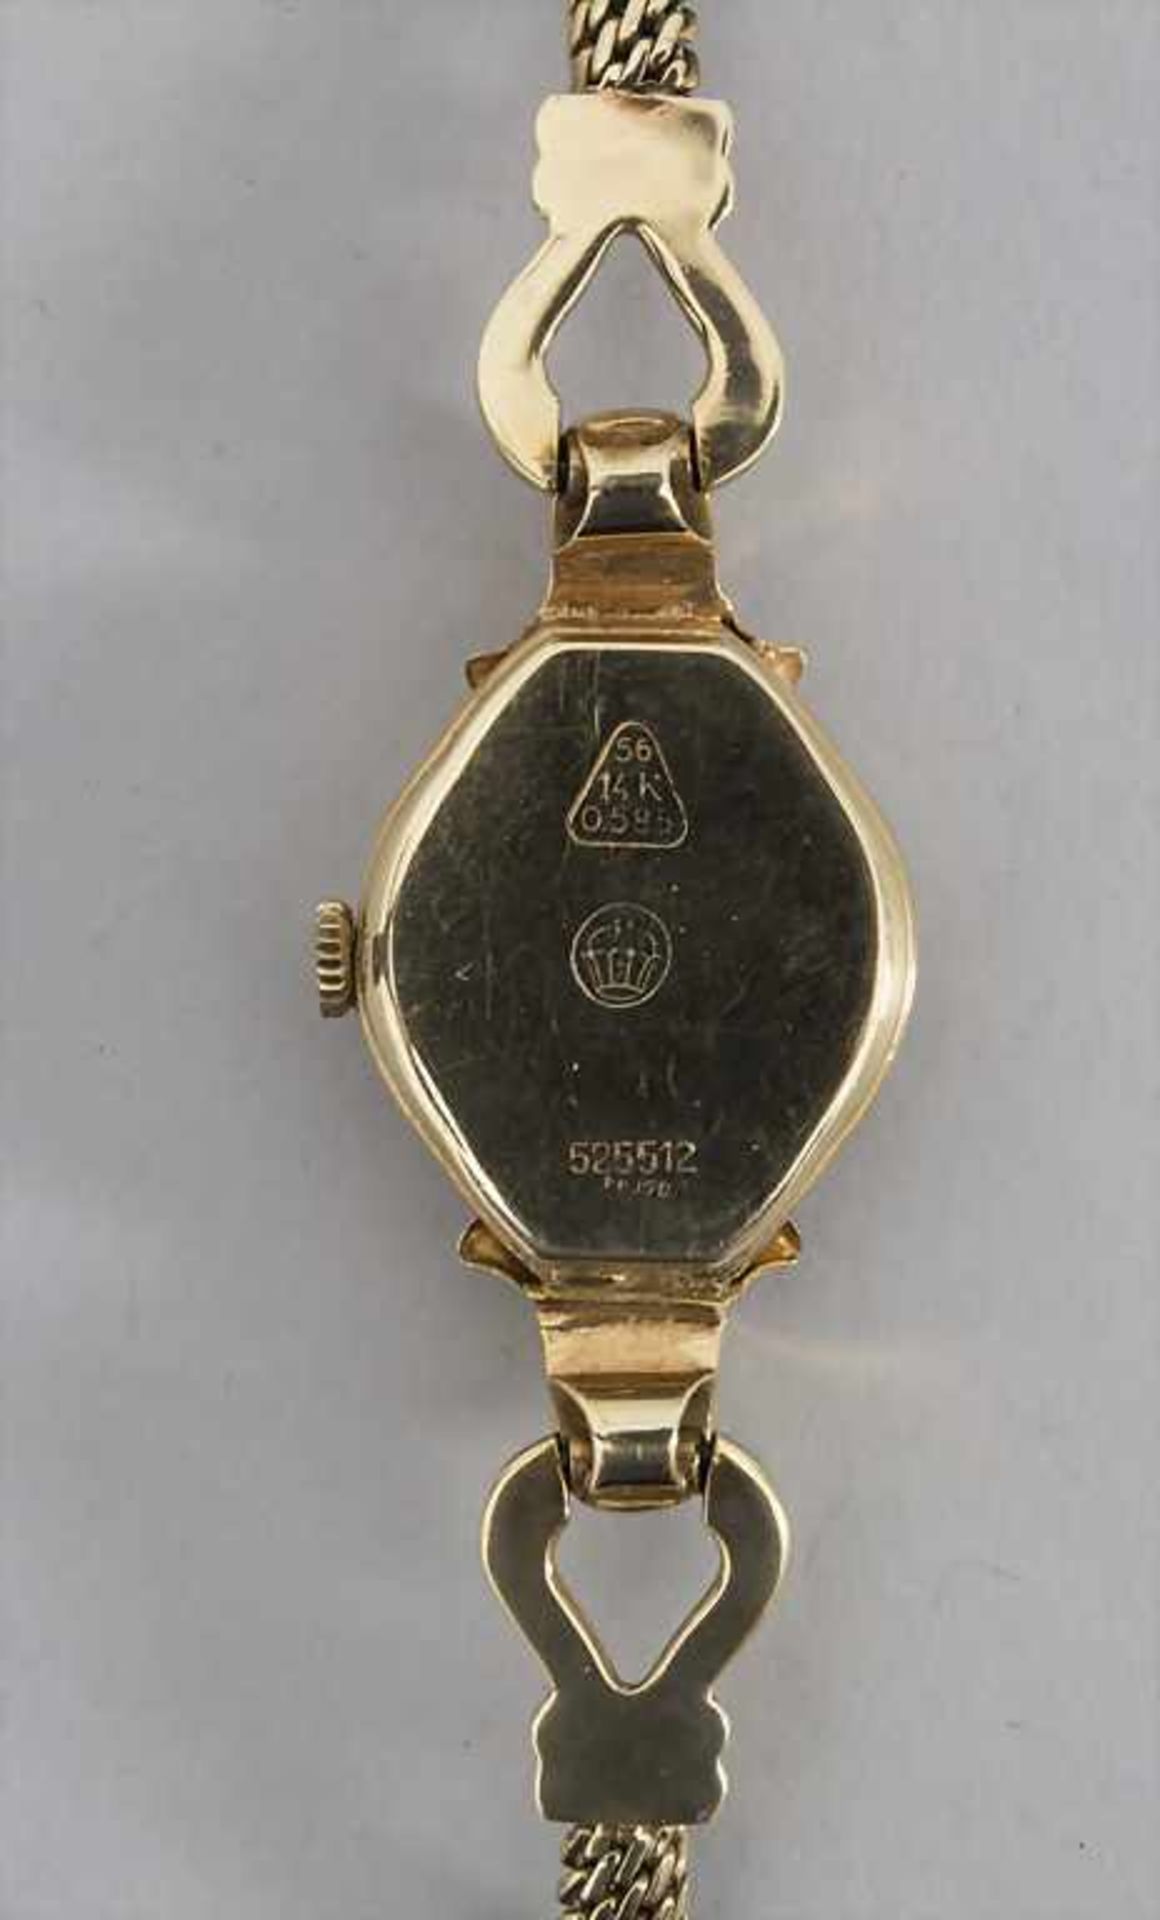 Damenarmbanduhr in Gold / A ladies watch in gold, H.F.B, um 1960 - Bild 2 aus 5